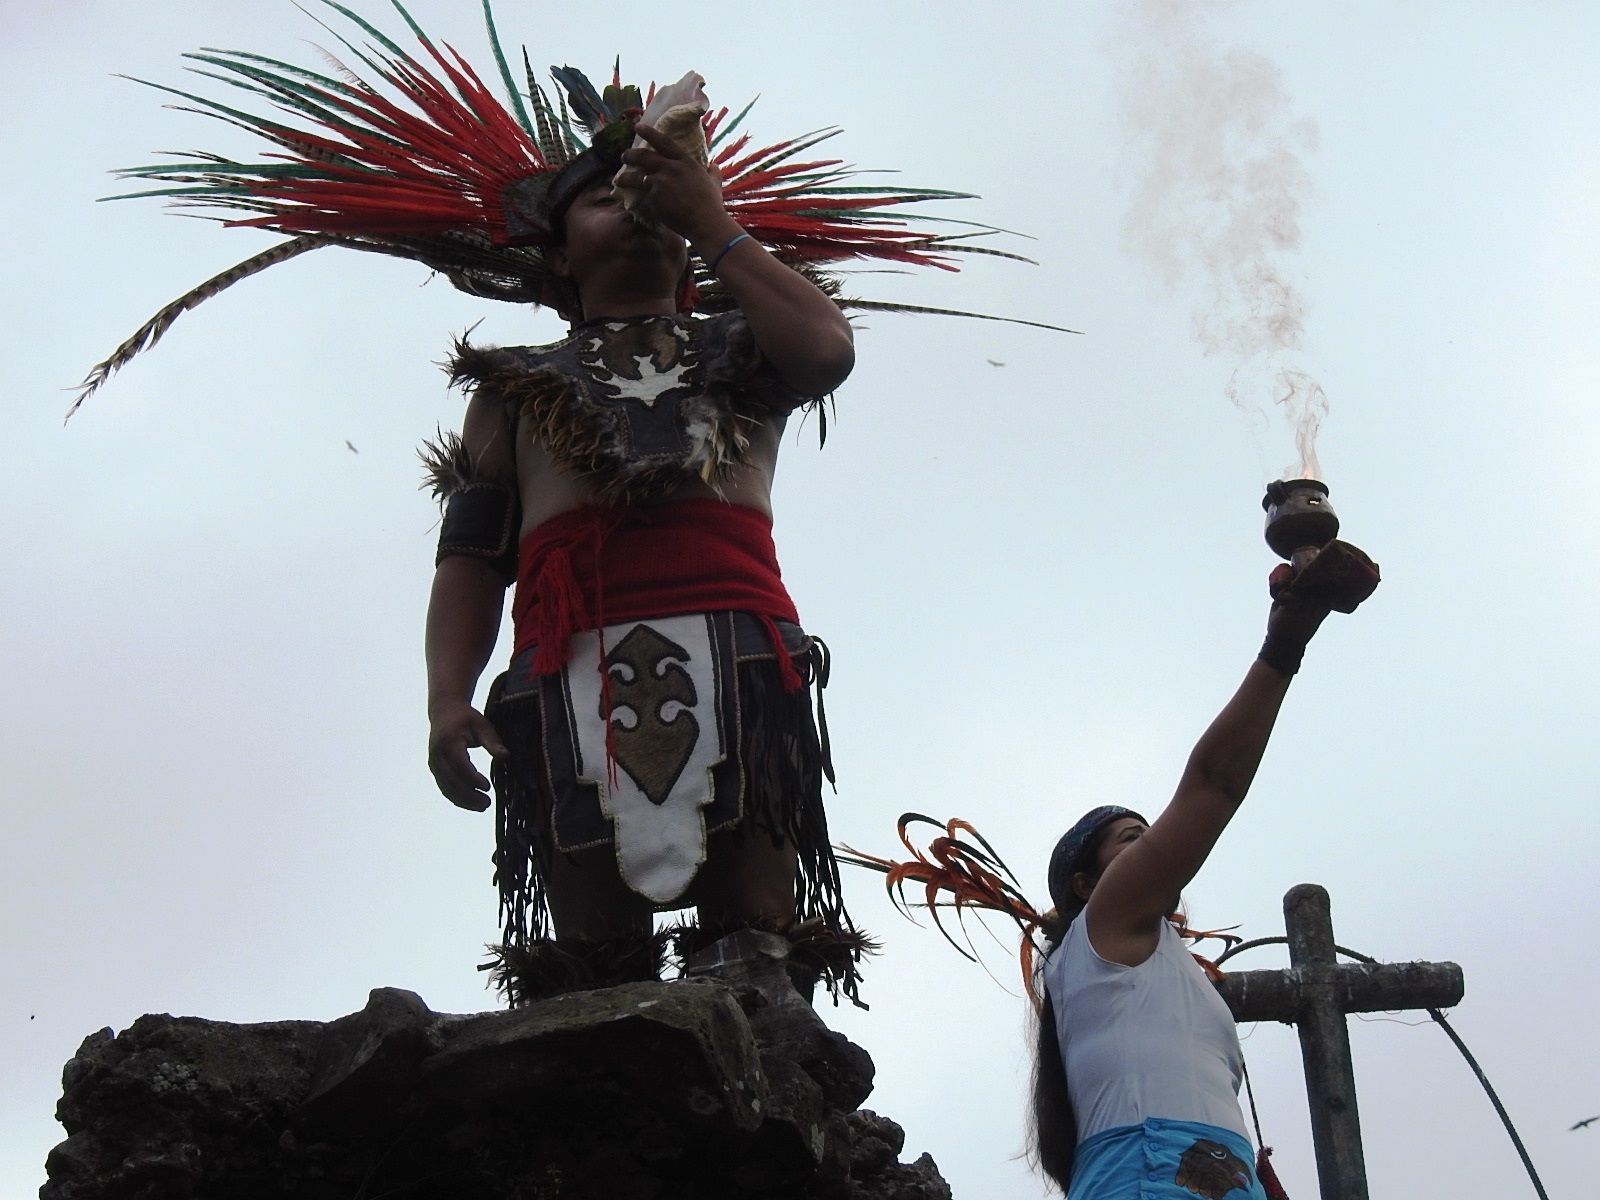 Certifica ONU danza prehispánica interpretada en Xicotepec